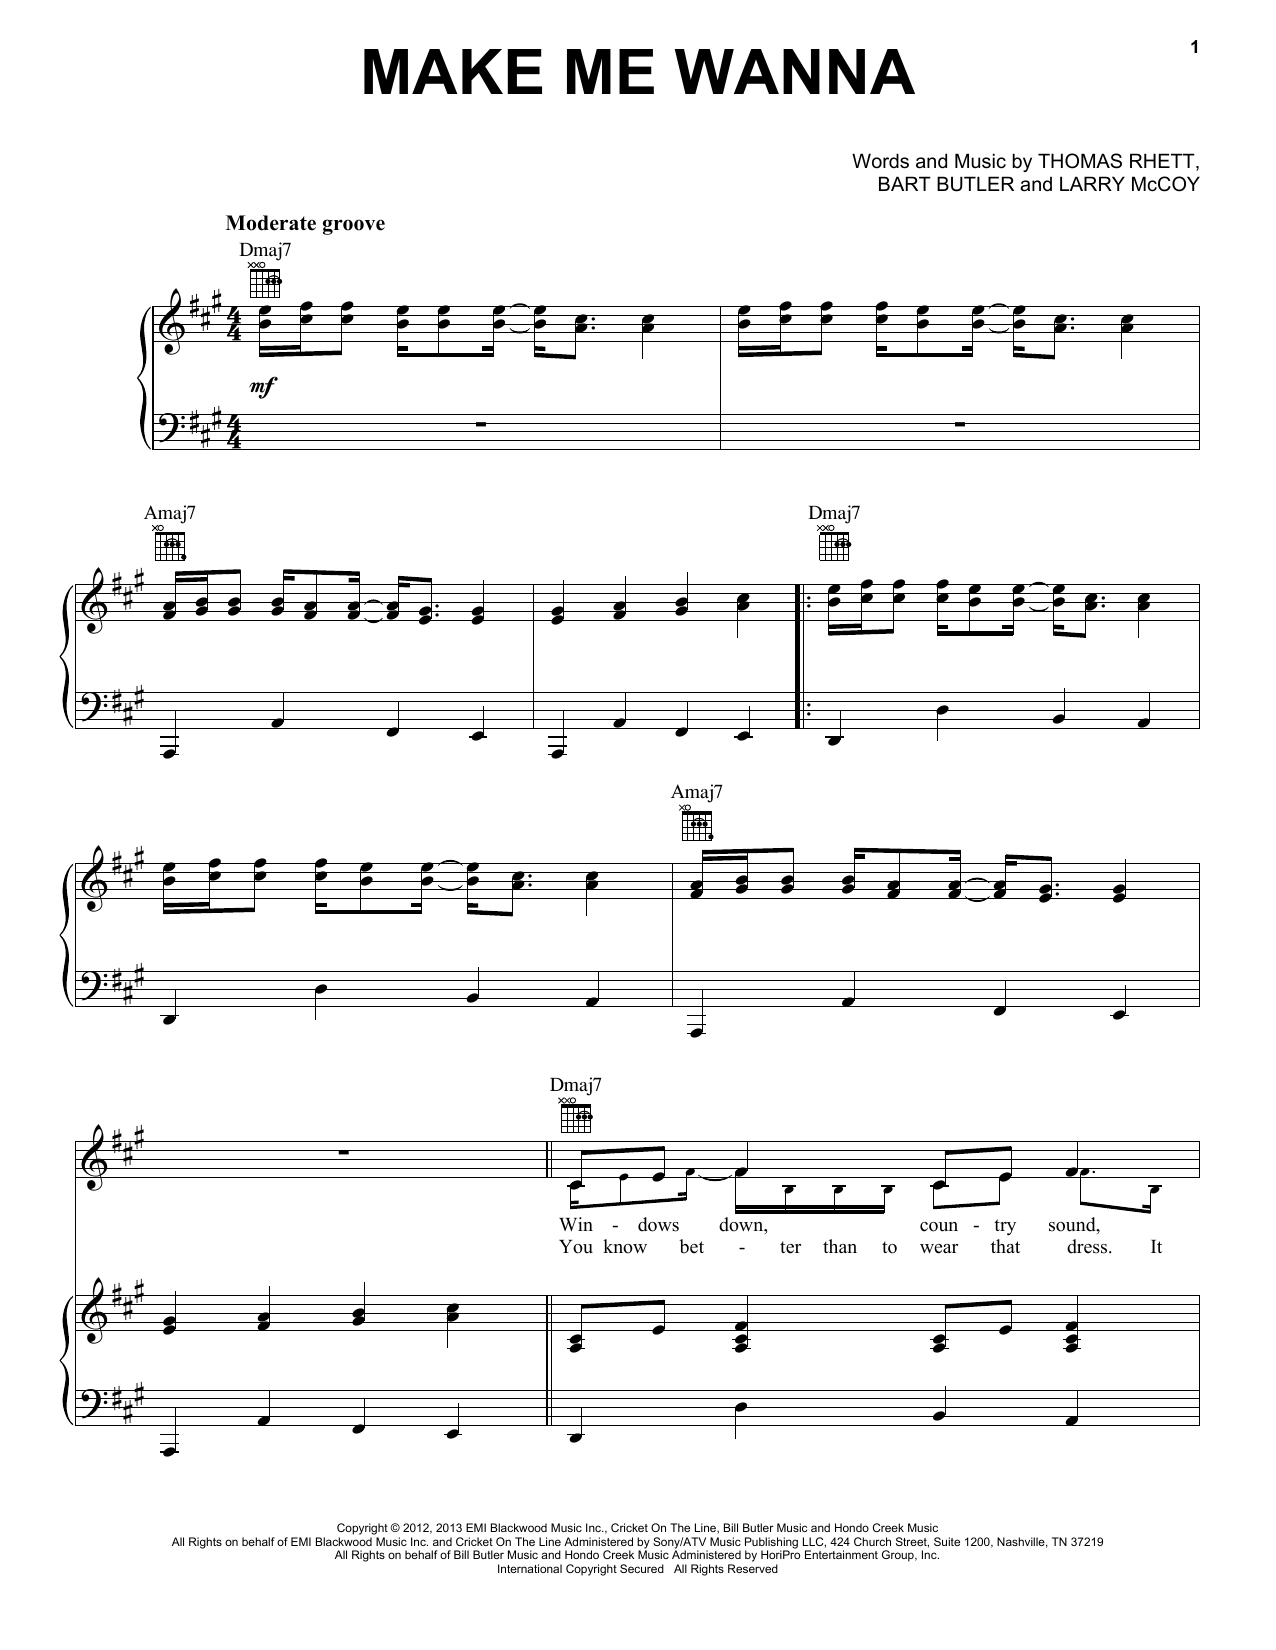 Thomas Rhett Make Me Wanna Sheet Music Notes & Chords for Piano, Vocal & Guitar (Right-Hand Melody) - Download or Print PDF